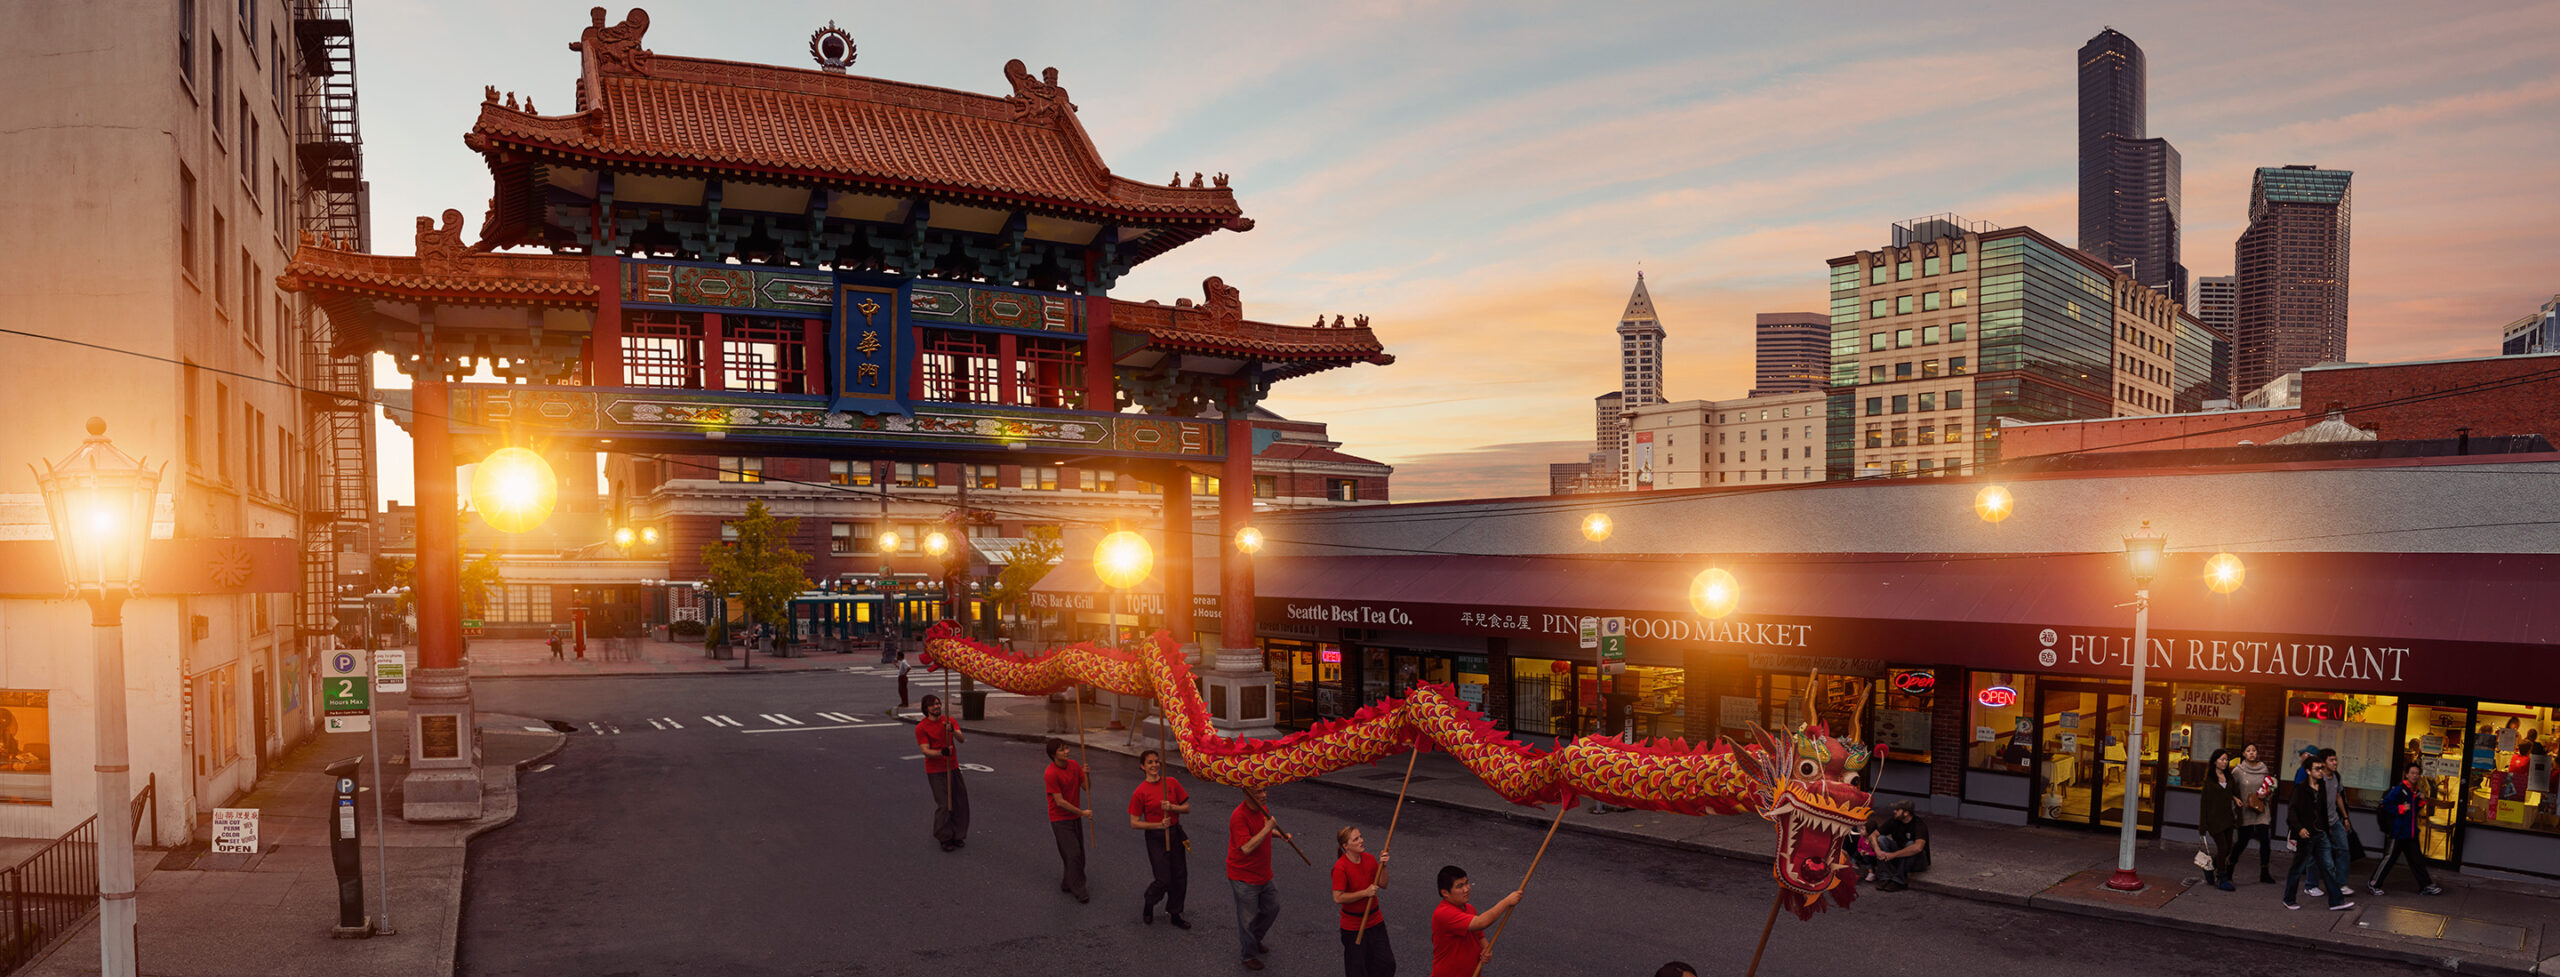 The Chinatown-International District